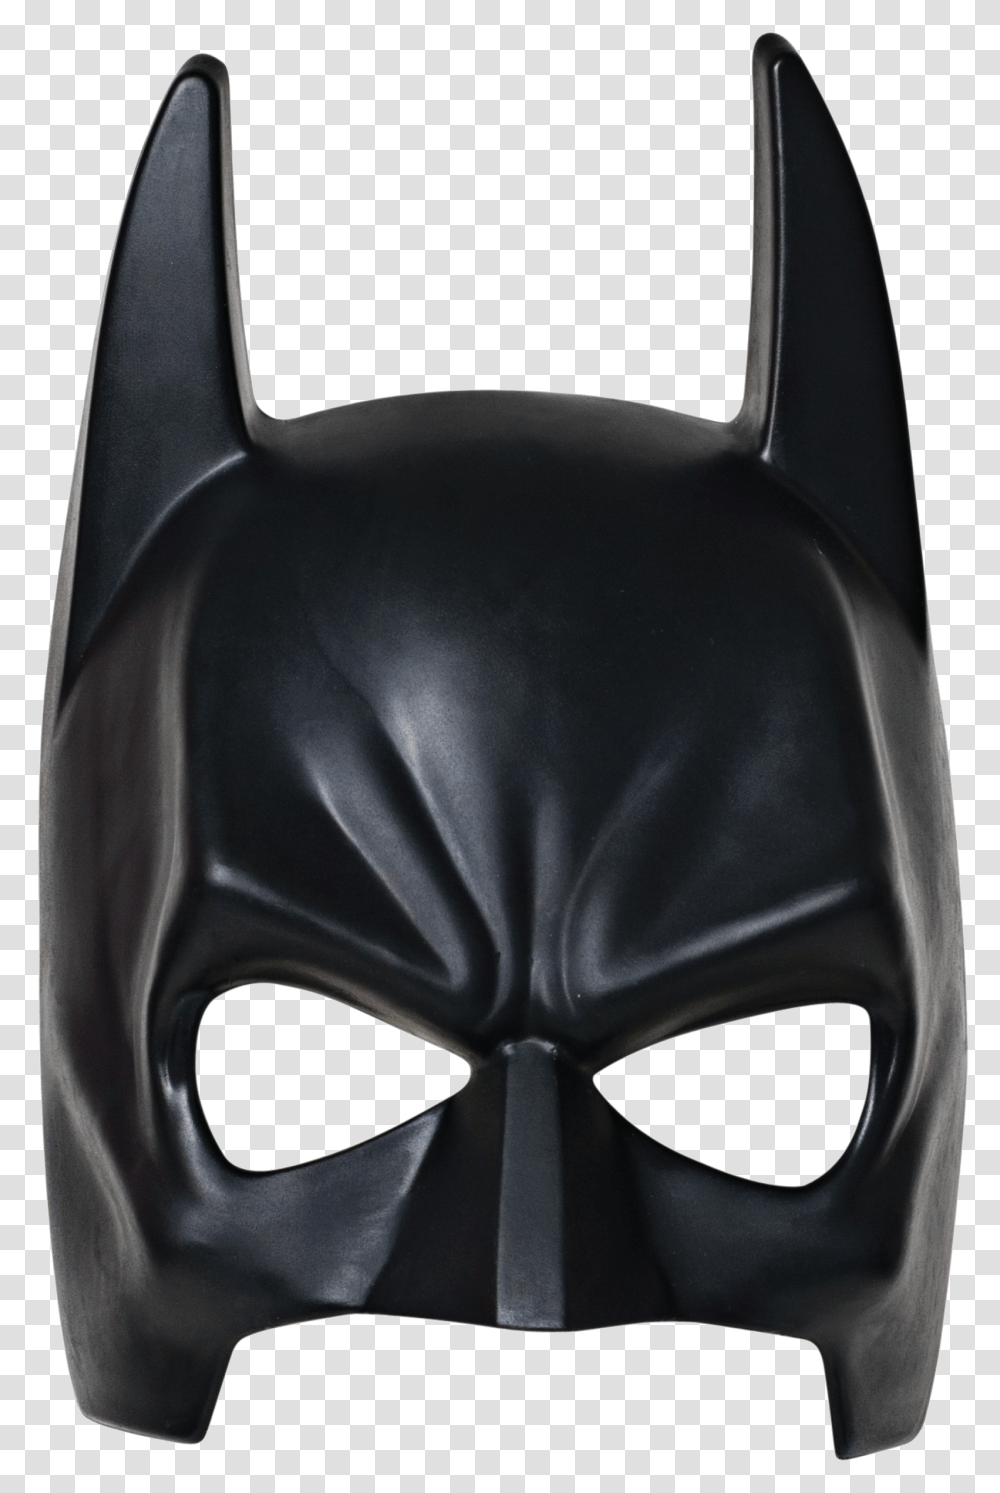 Batman Mask Batman Mask, Backpack, Bag Transparent Png